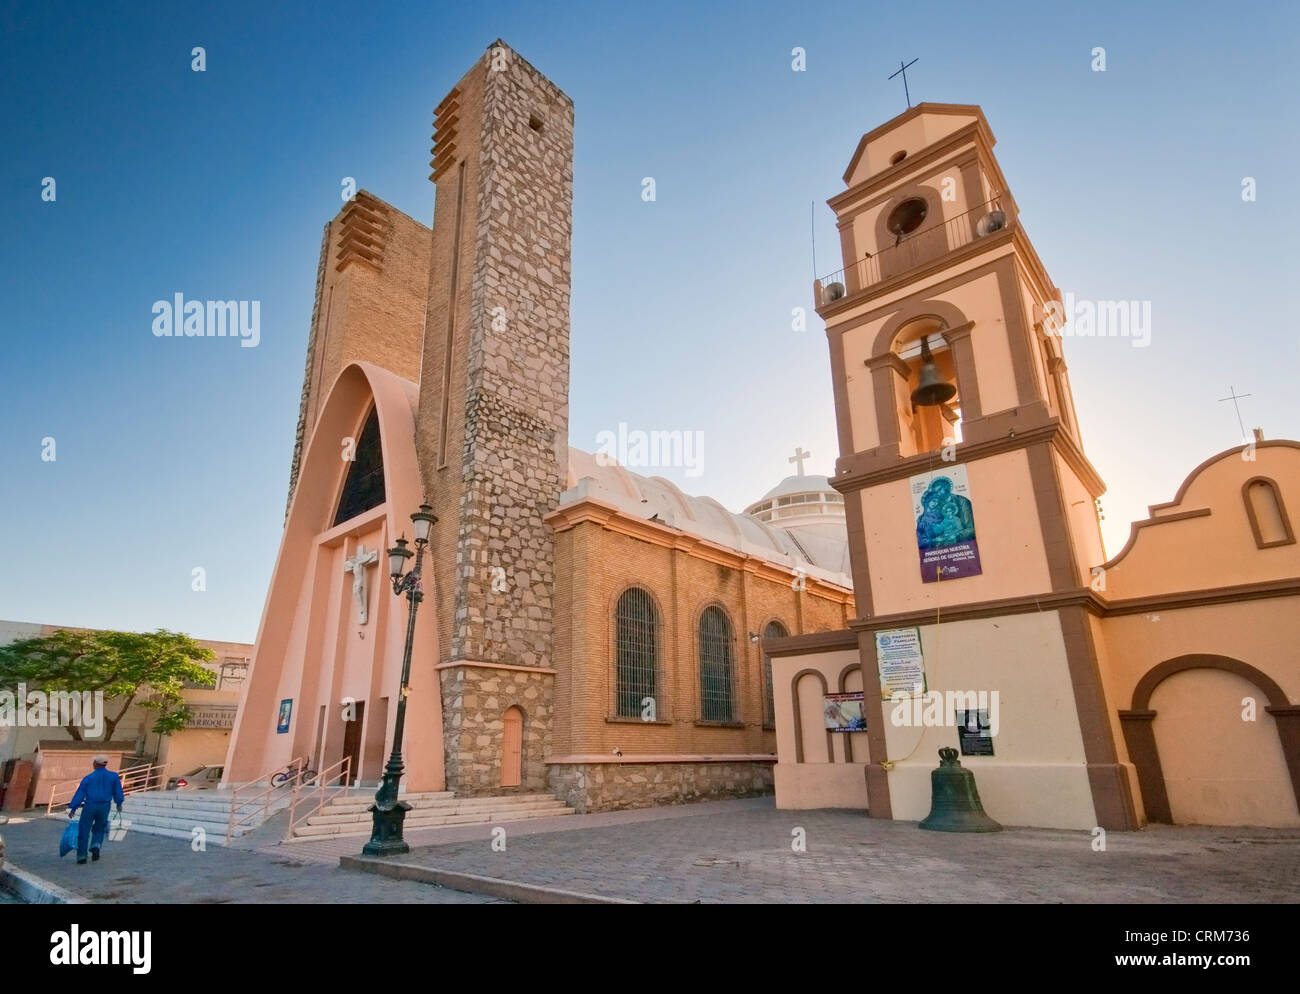 Parroquia de Nuestra Senora de Guadalupe, church and bell tower at Plaza  Principal in Reynosa, Rio Grande Valley, Mexico Stock Photo - Alamy